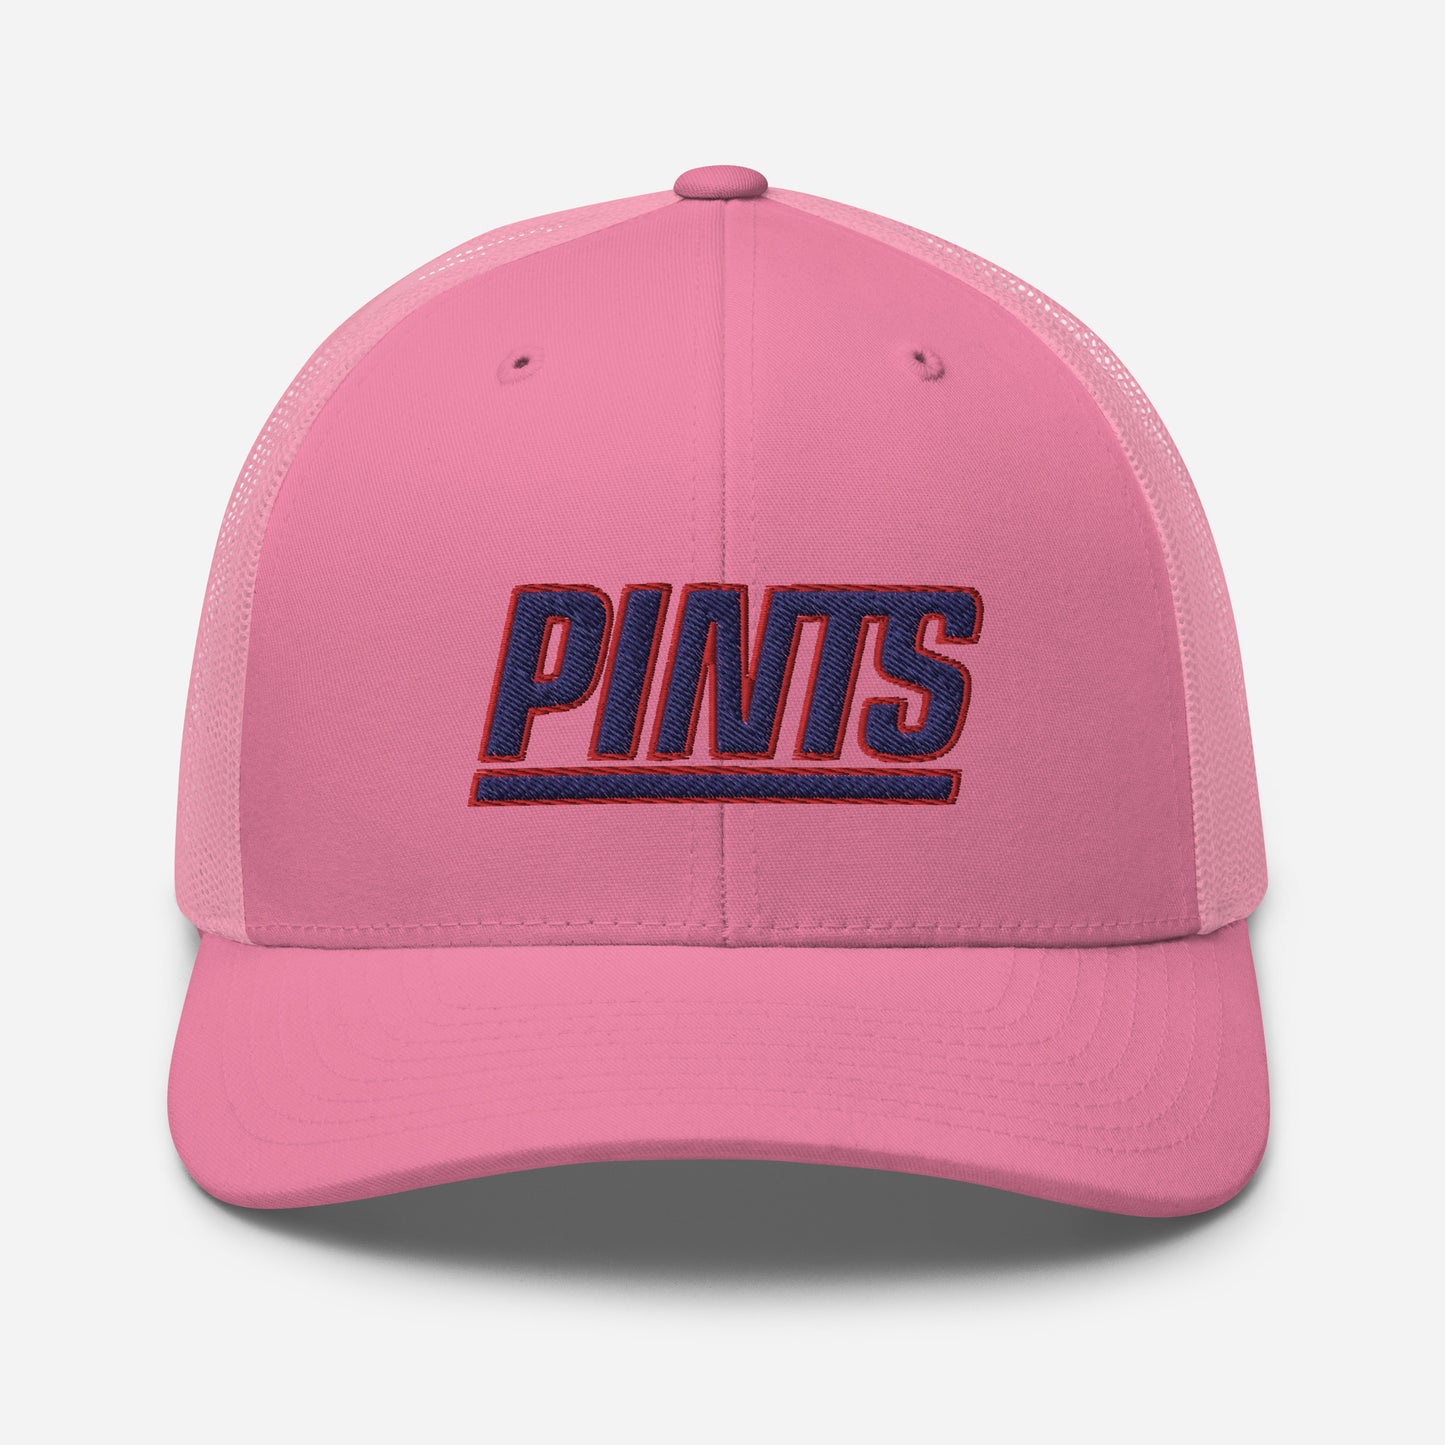 Pints Trucker Cap